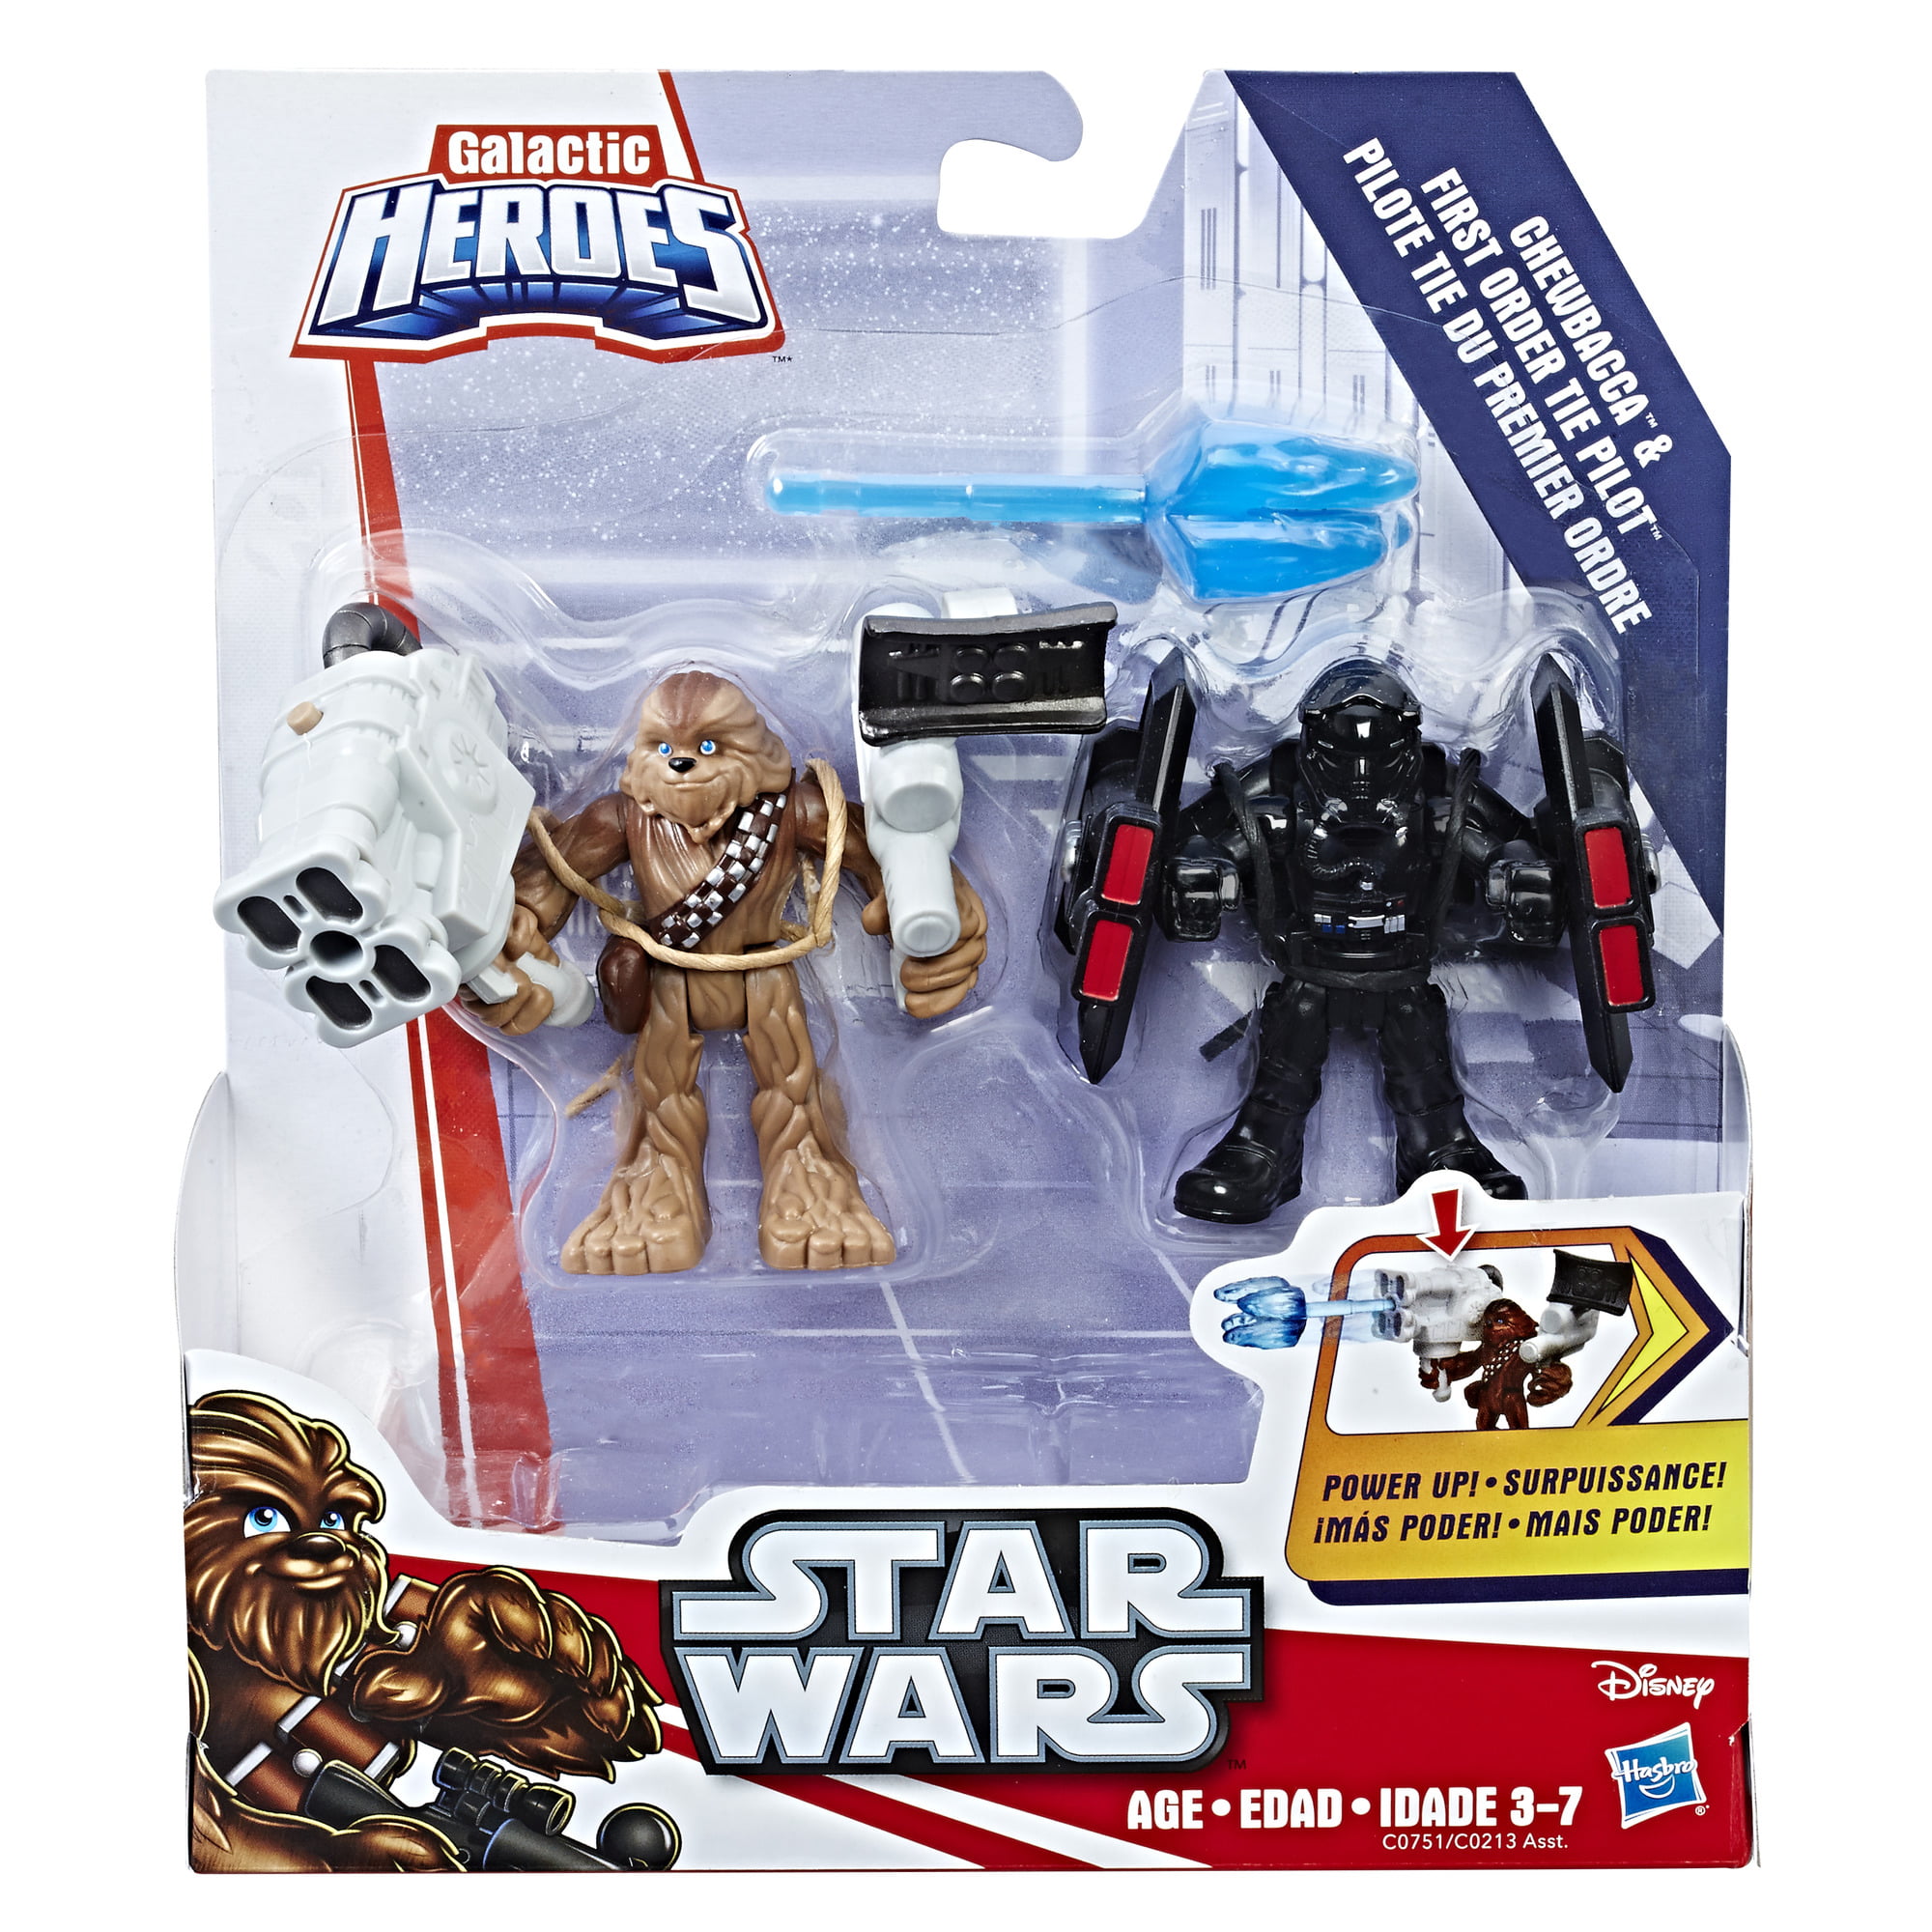 Chewbacca Mini Figure Star Wars Galactic Heroes Playskool for sale online